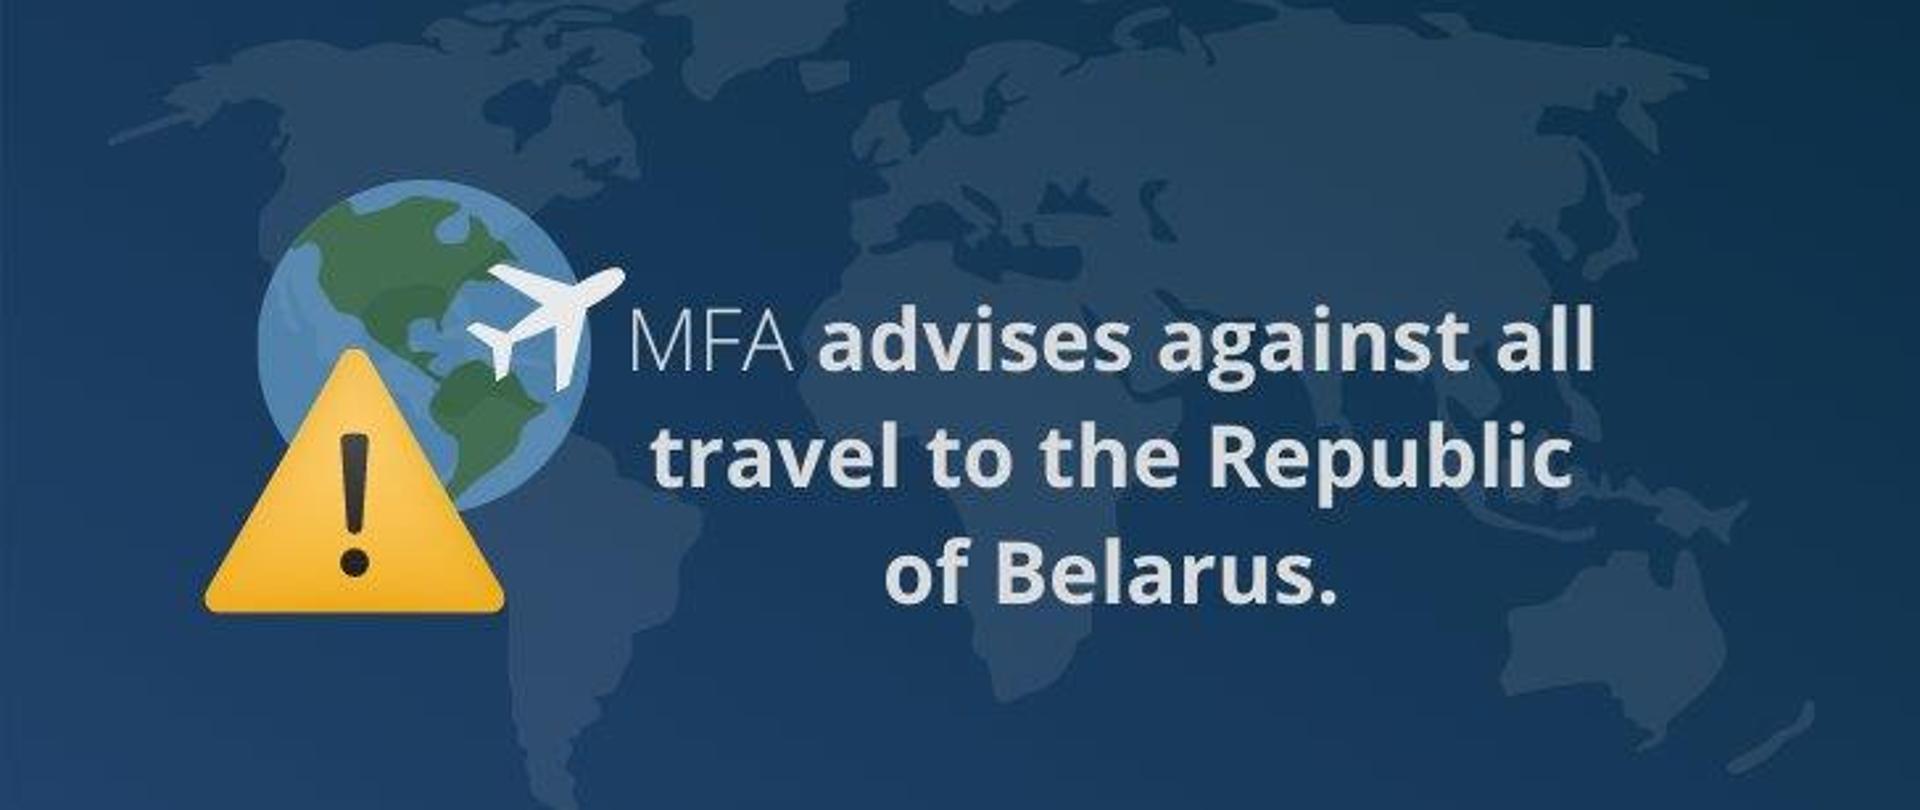 fco travel advice belarus